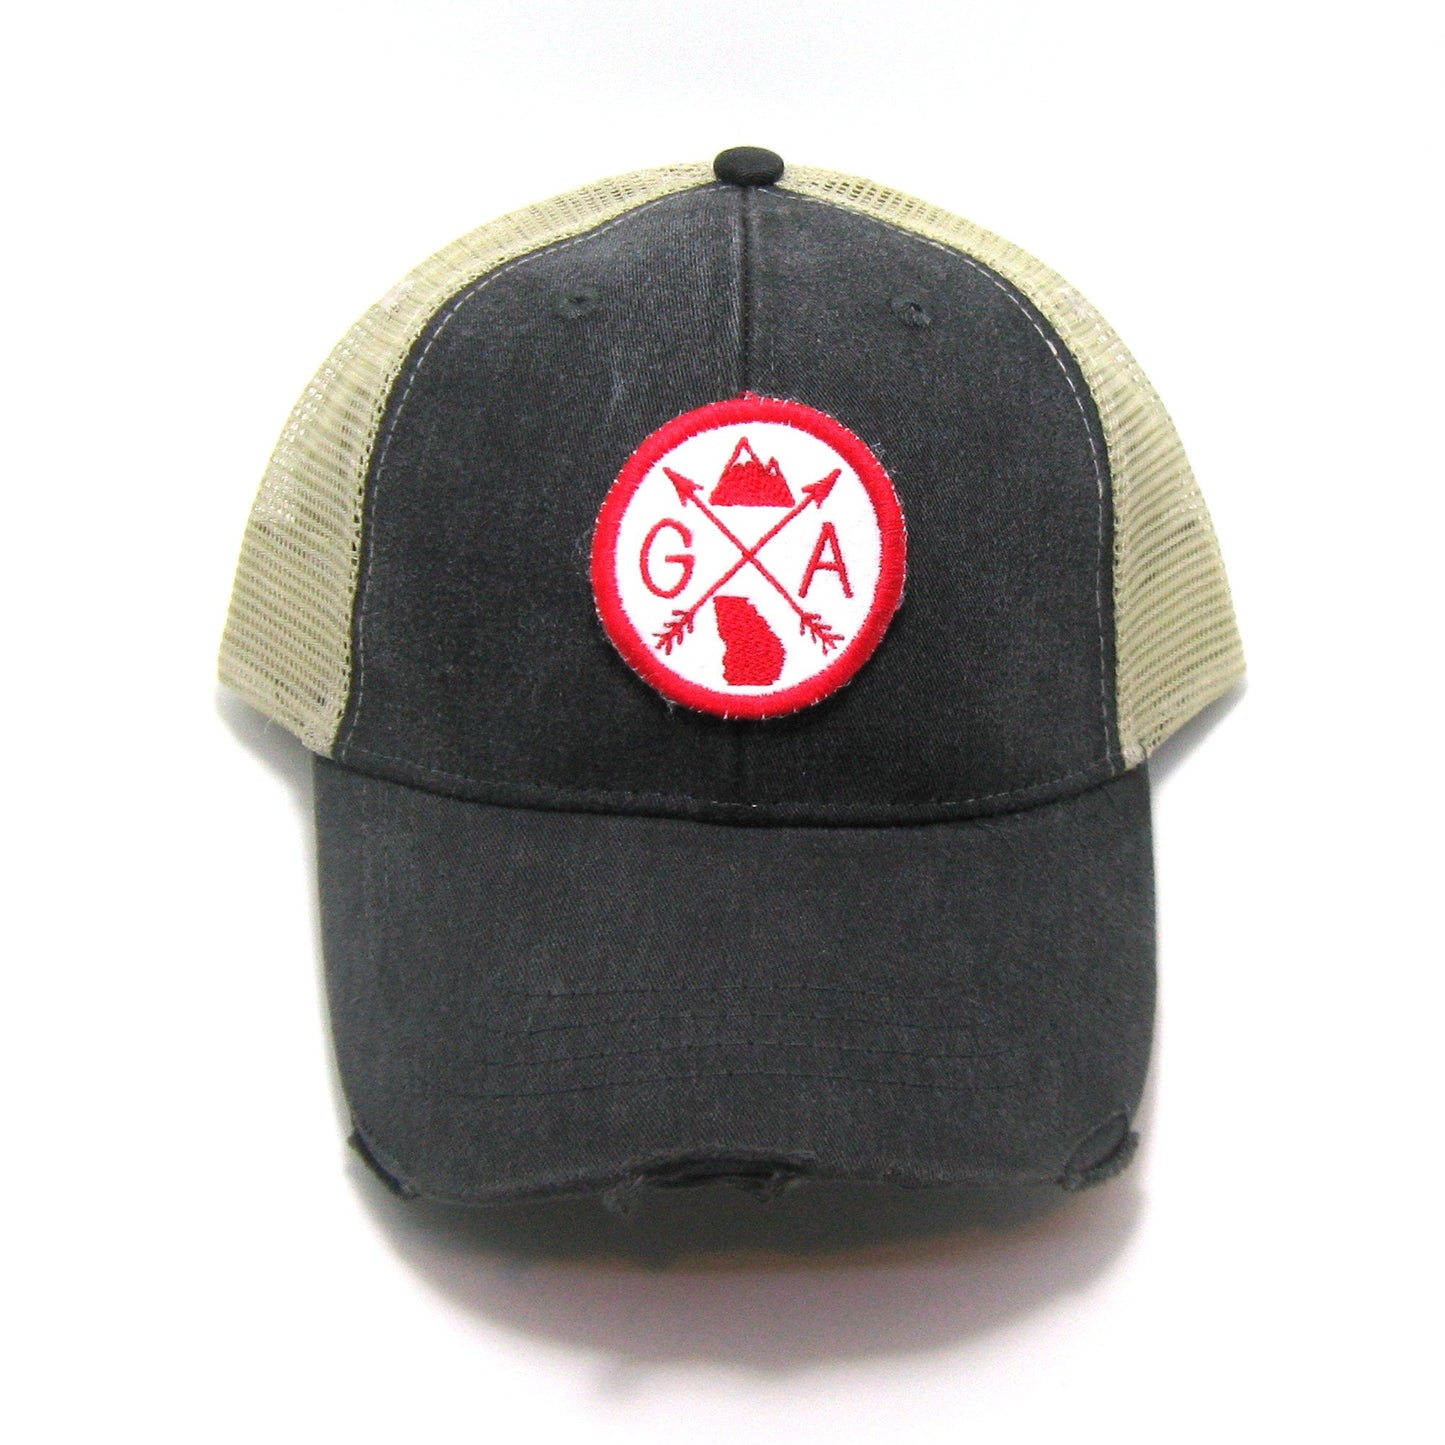 Georgia Hat - Distressed Snapback Trucker Hat - Georgia Arrow Compass